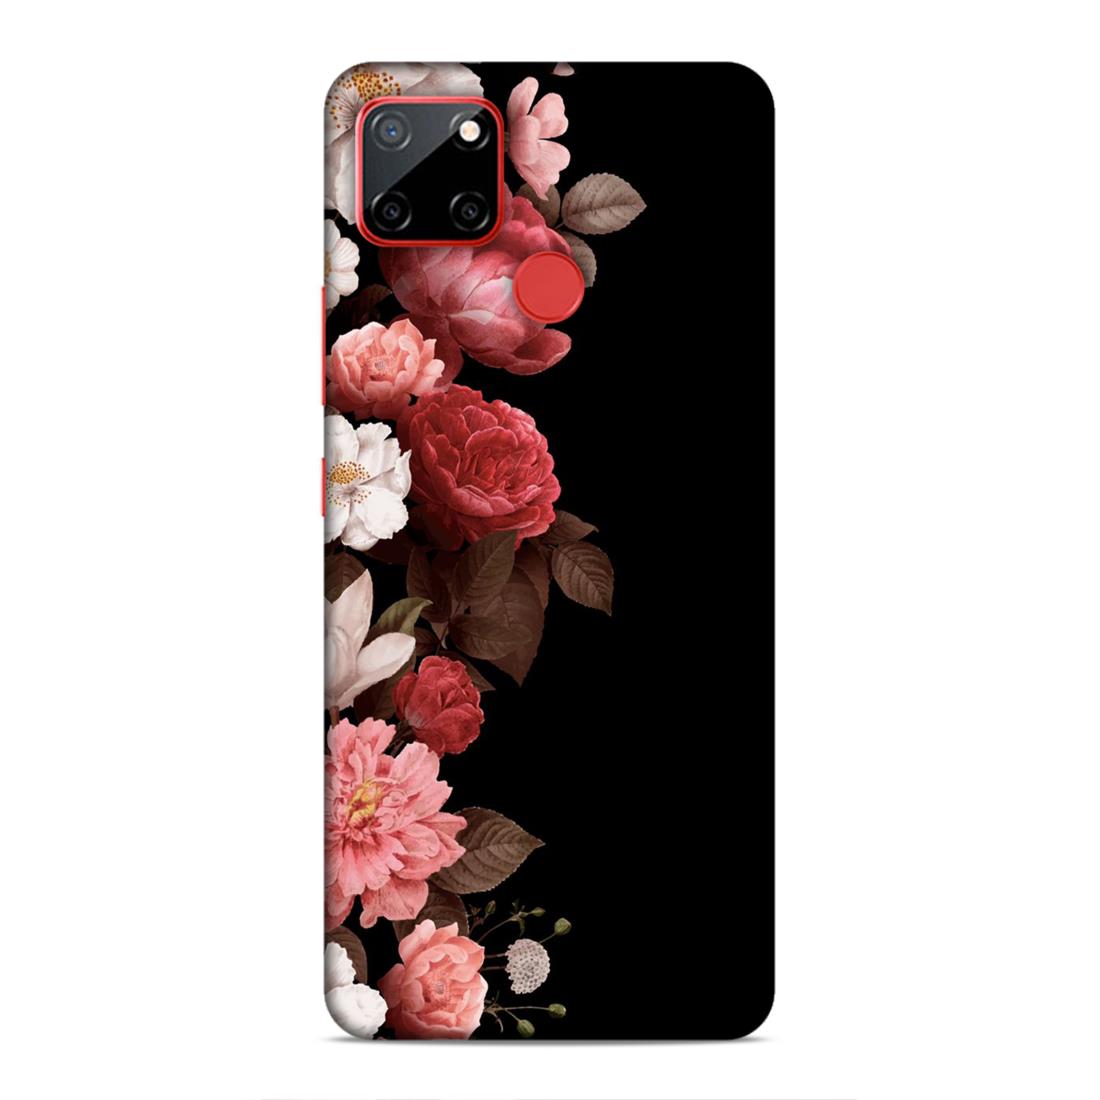 Floral in Black Hard Back Case For Realme C12 / C25 / C25s / Narzo 20 / 30A